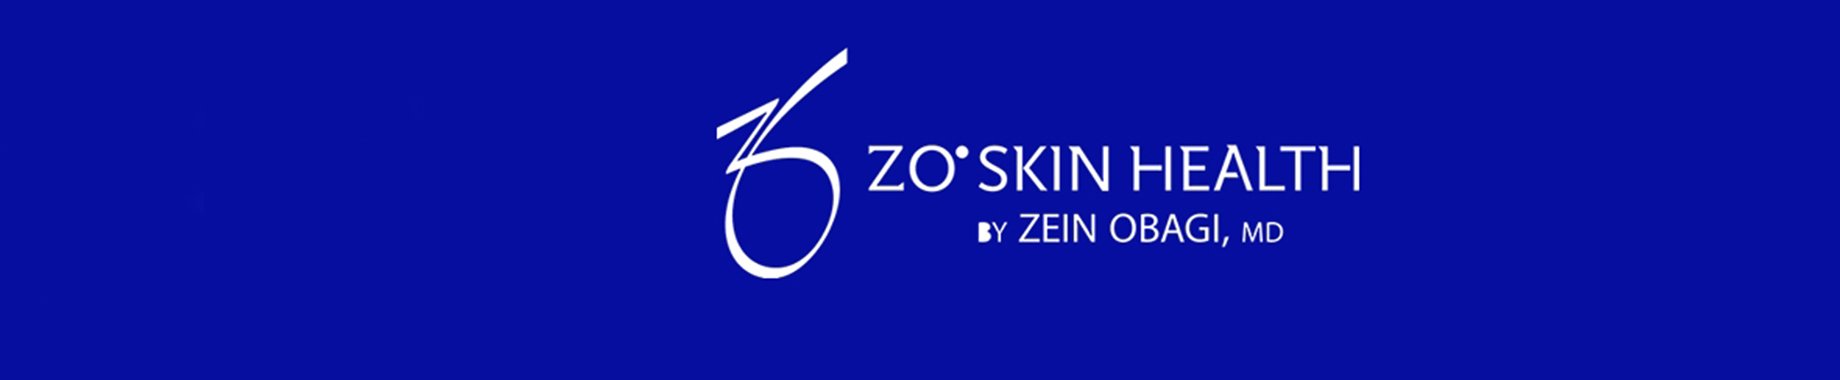 Zo Skin health London